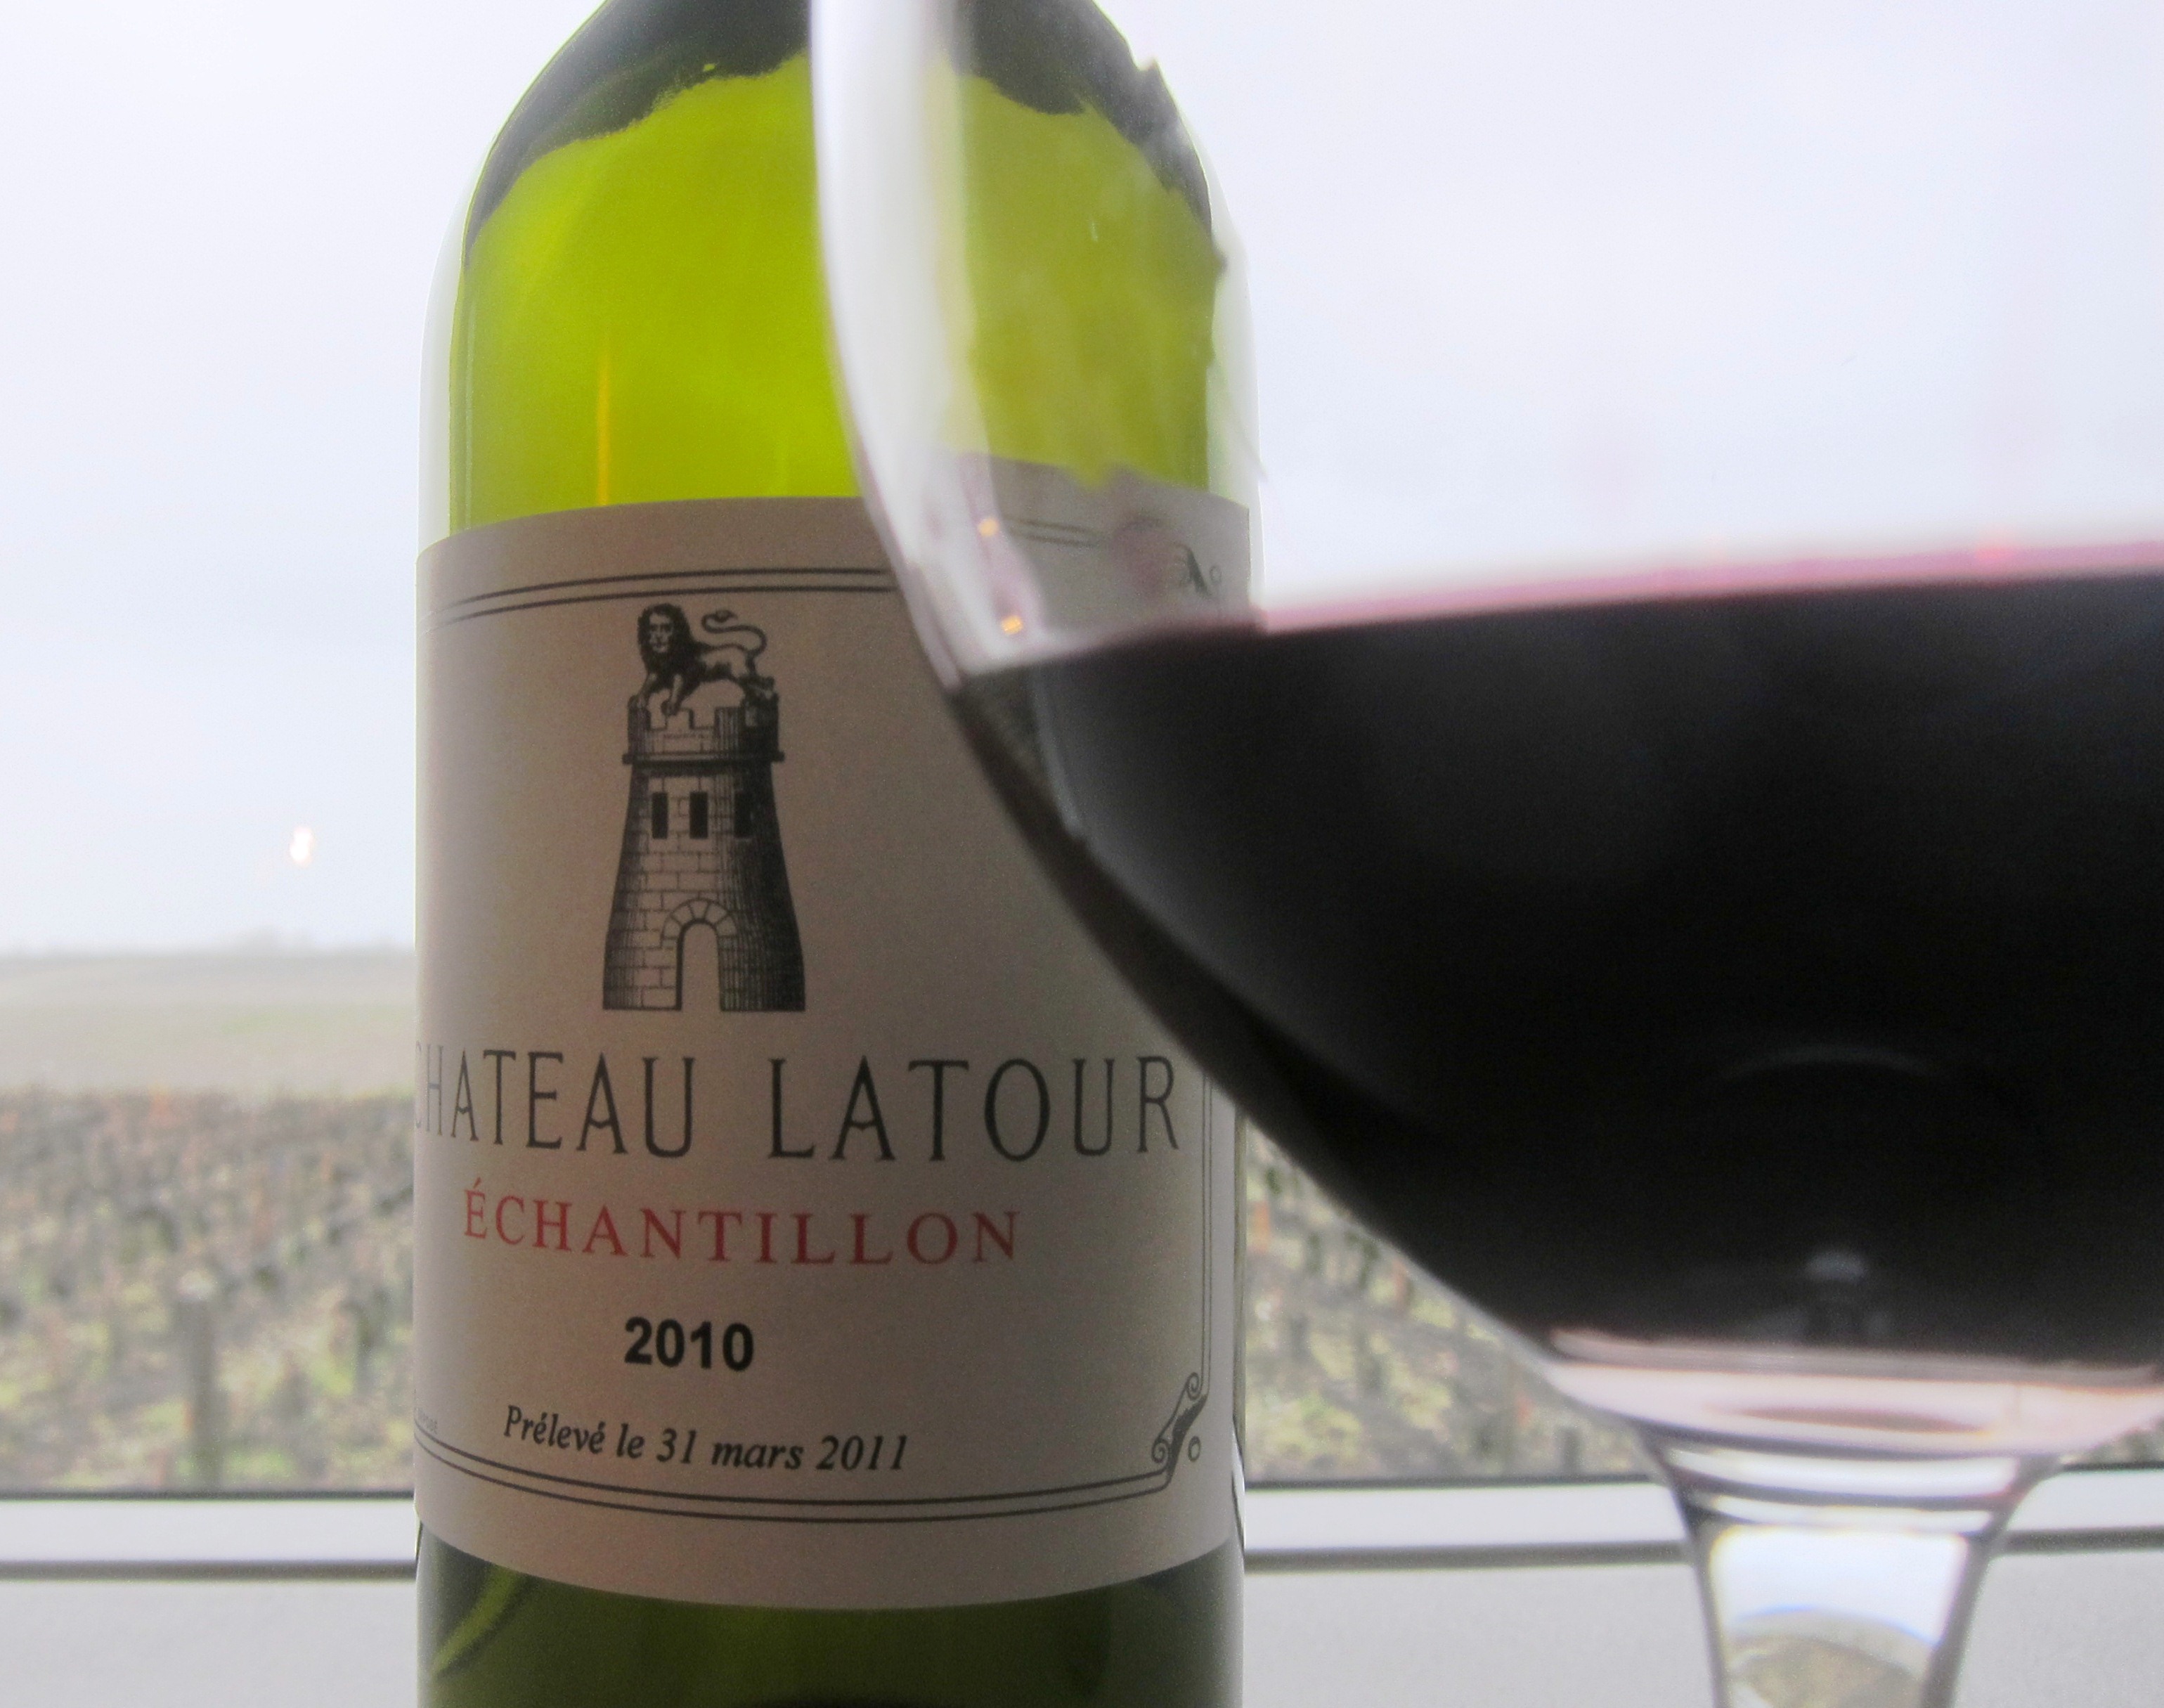 Chateau Latour Bordeaux вино. Шато Бранер Дюкрю 2010 вино. Вино Chateau cos d'Estournel. Pauillac вино. Chateau le crock